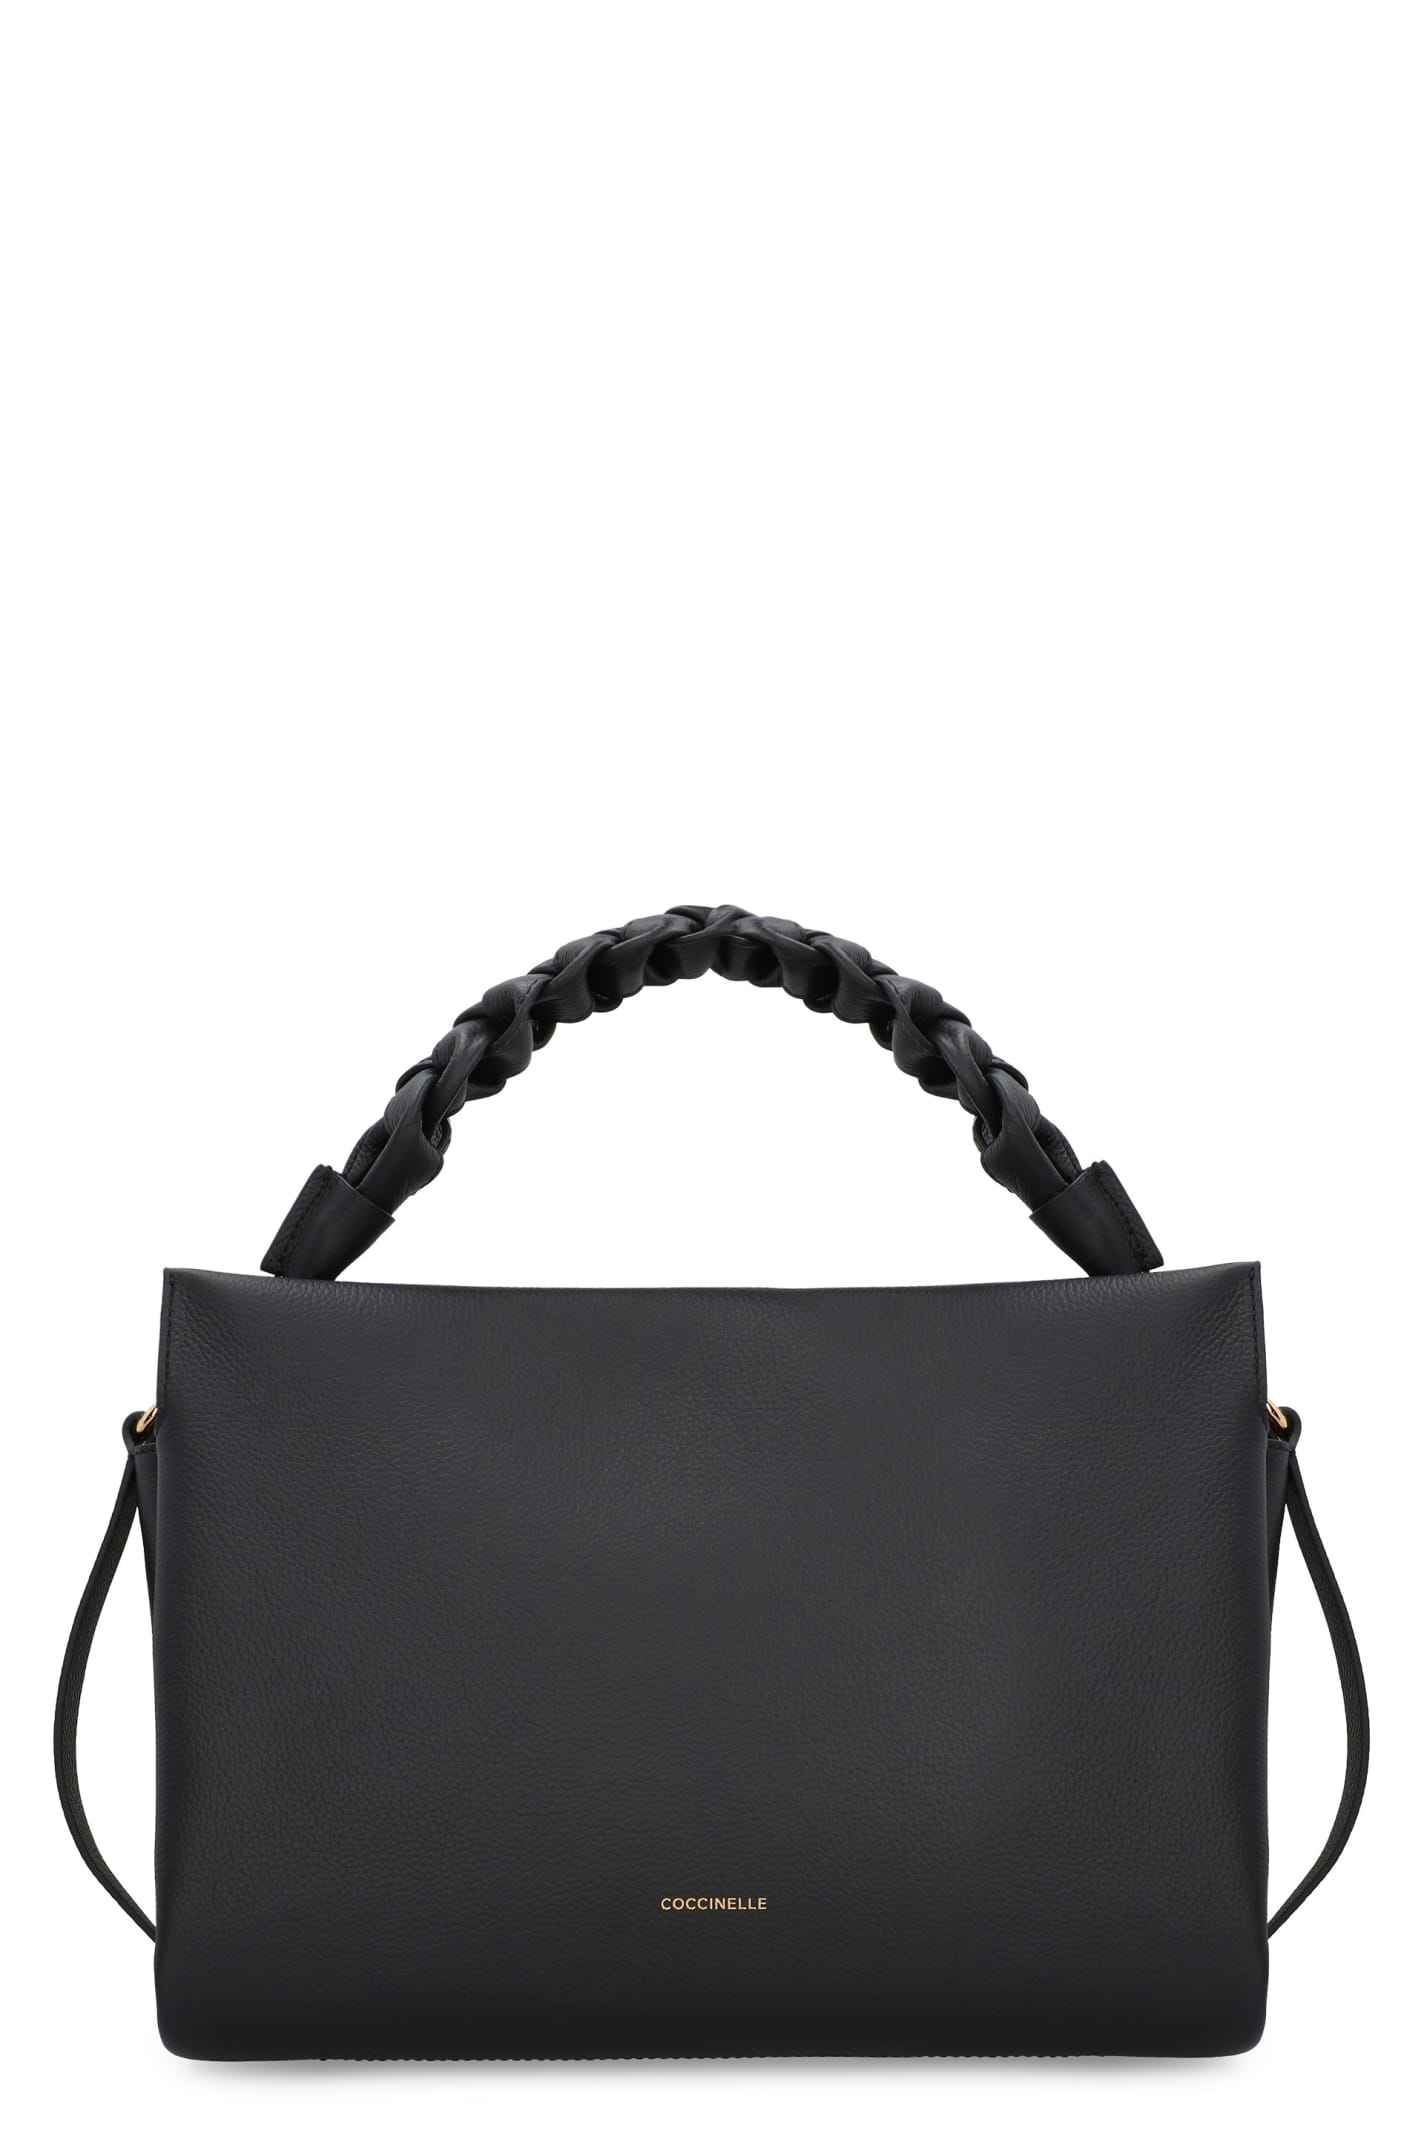 Coccinelle Boheme Leather Handbag In Noir/cuir